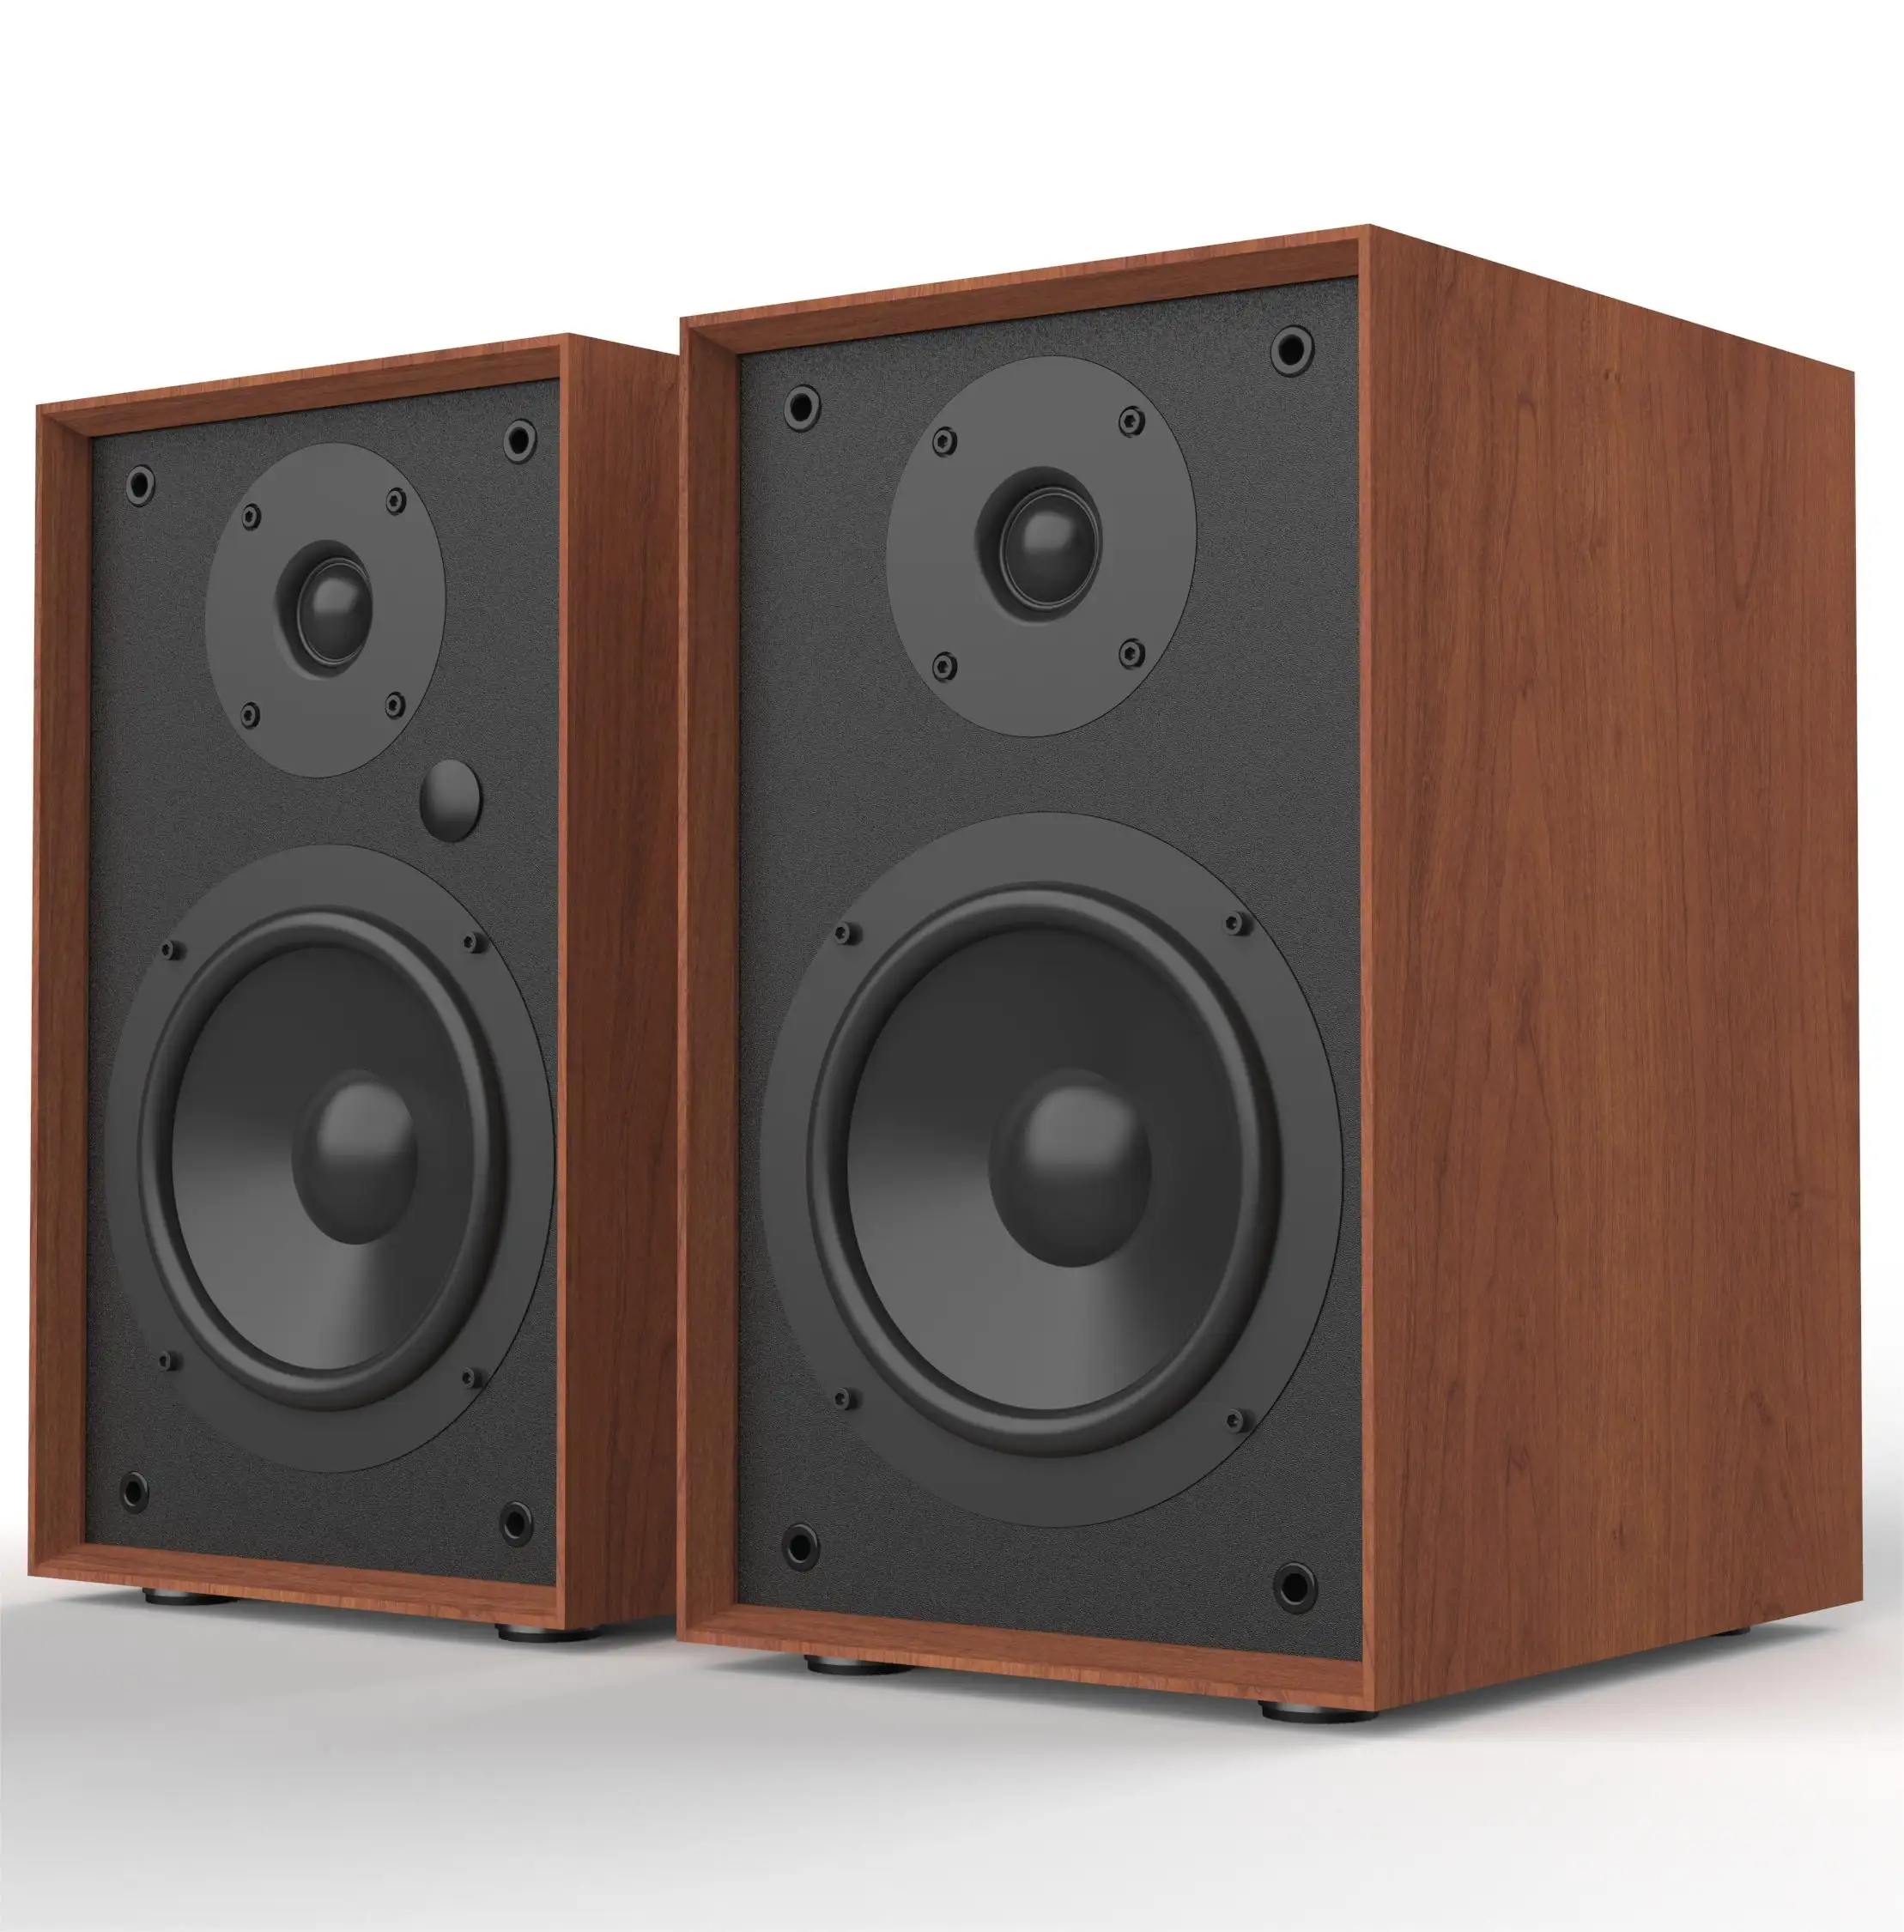 OEM/ODM 120W SR07B music system Handmade wooden housing Stylish Design Super Bass HiFi sound speaker home theater